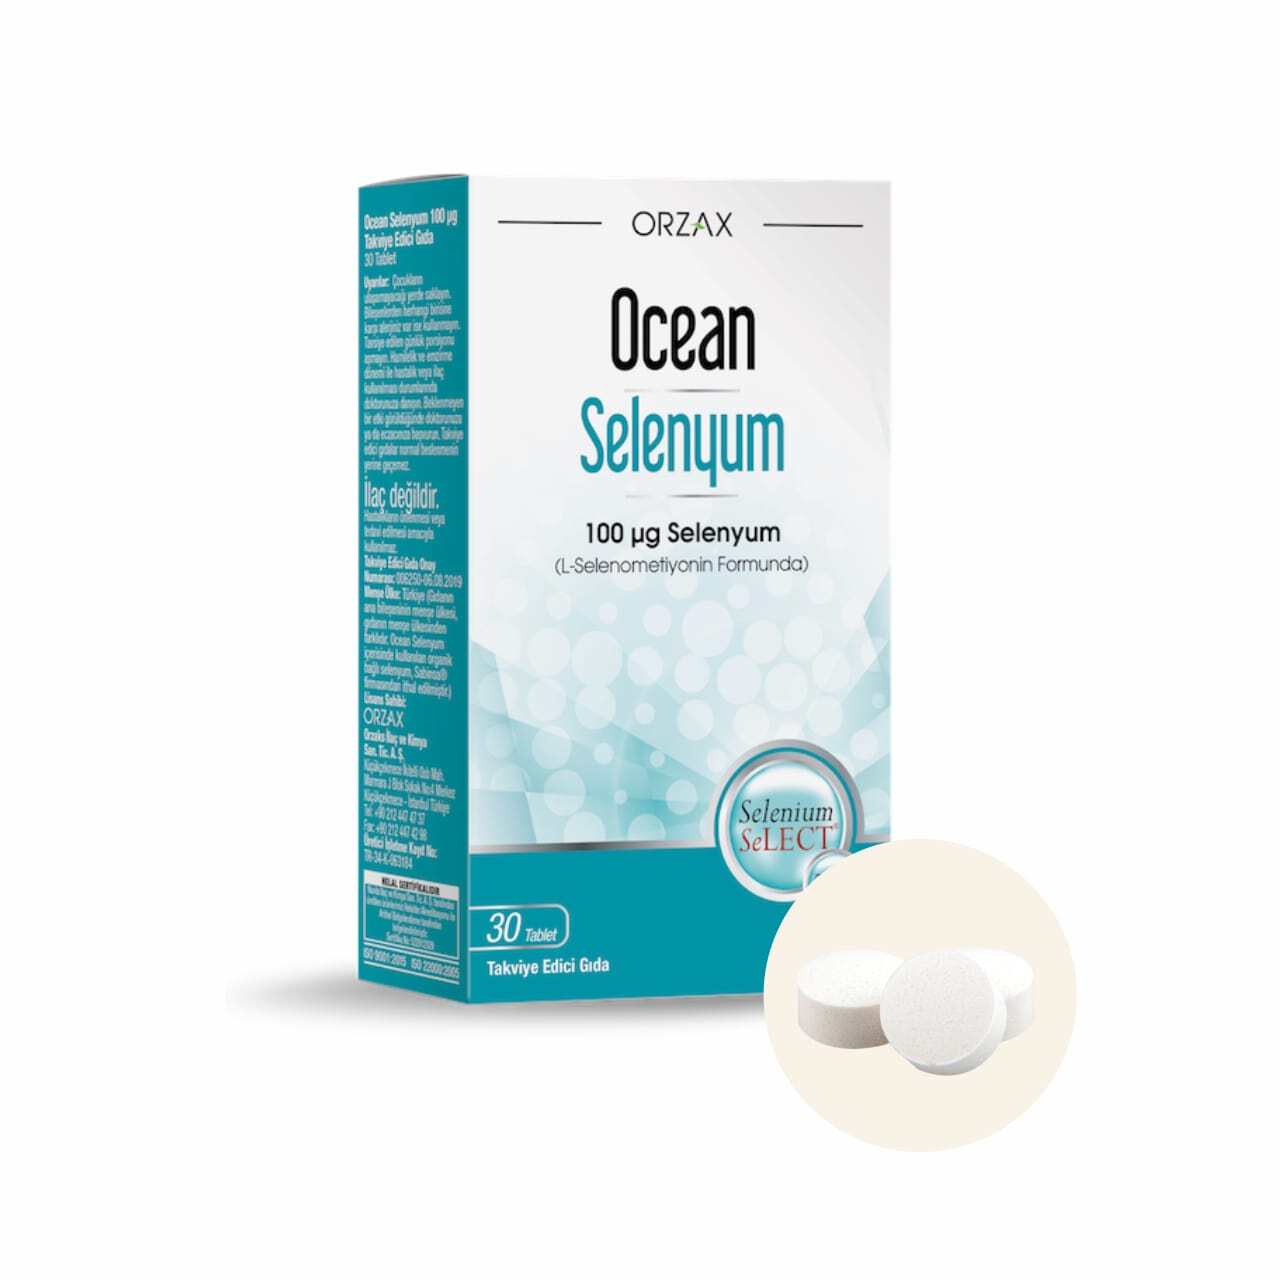 Турецкий селен. Orzax селен 200мкг. Ocean Selenium Orzax. Орзах витамины турецкие. Таблетки океан турецкие.